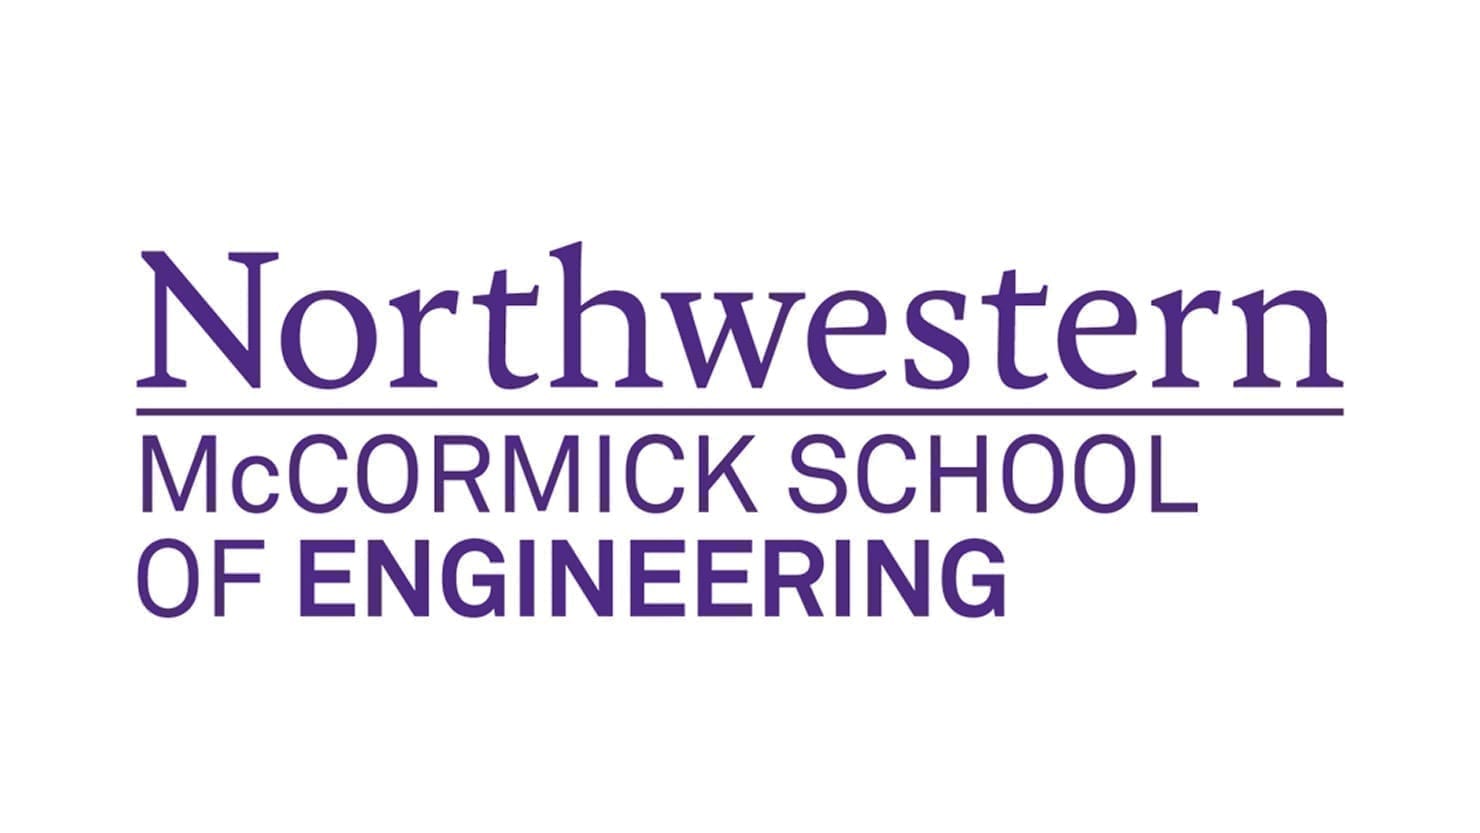 Robert R. McCormick School of Engineering and Applied Science